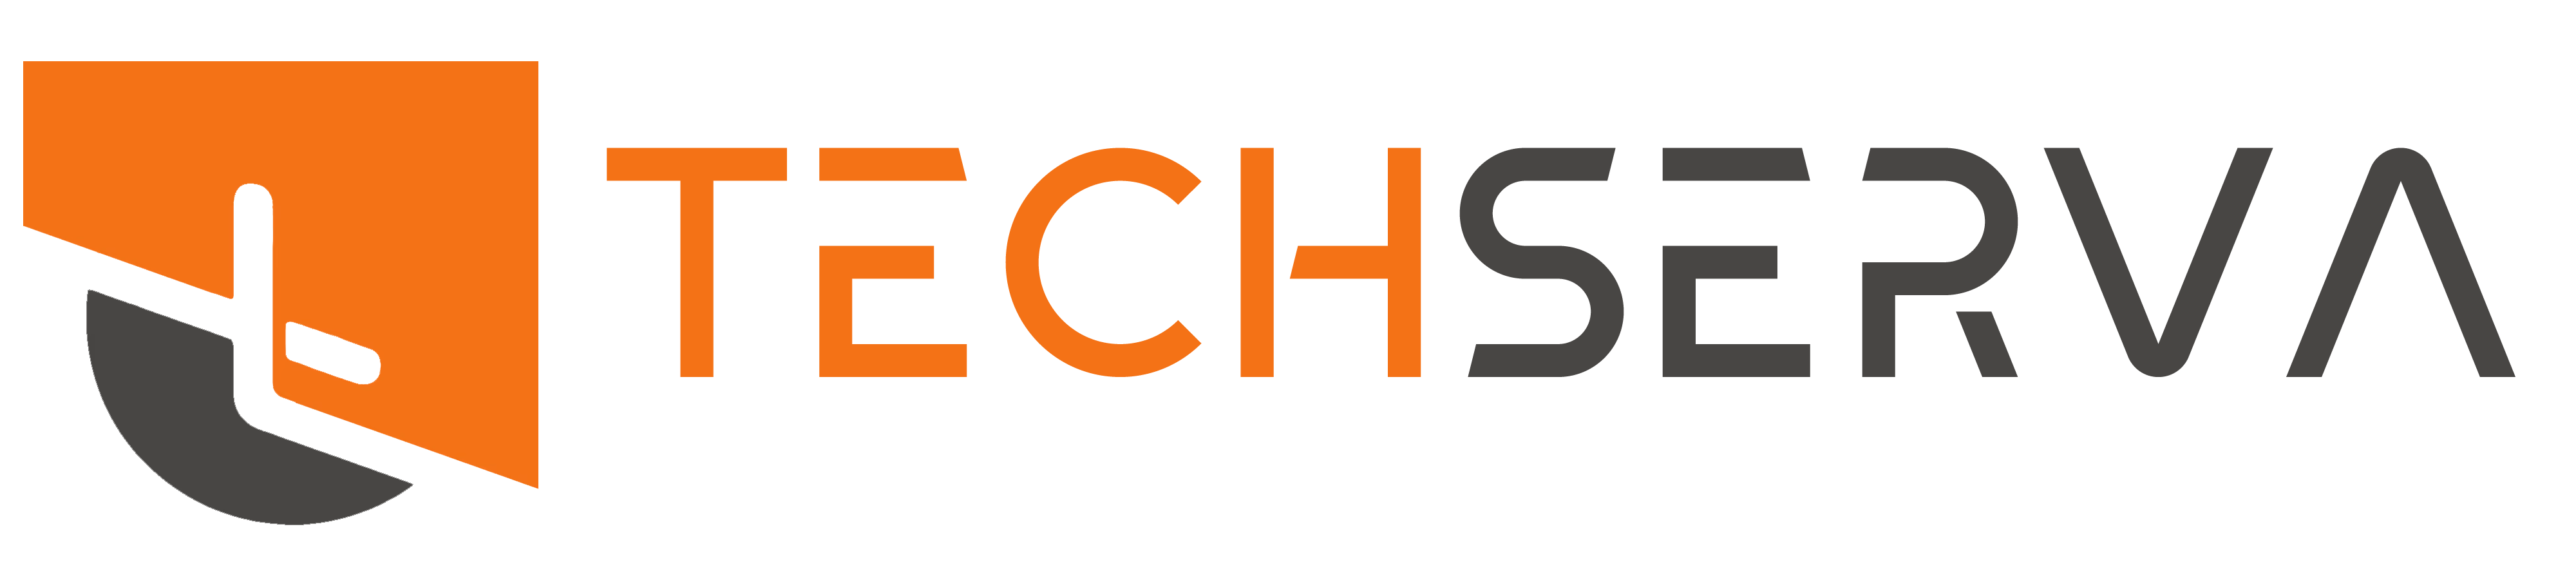 Techserva Logo